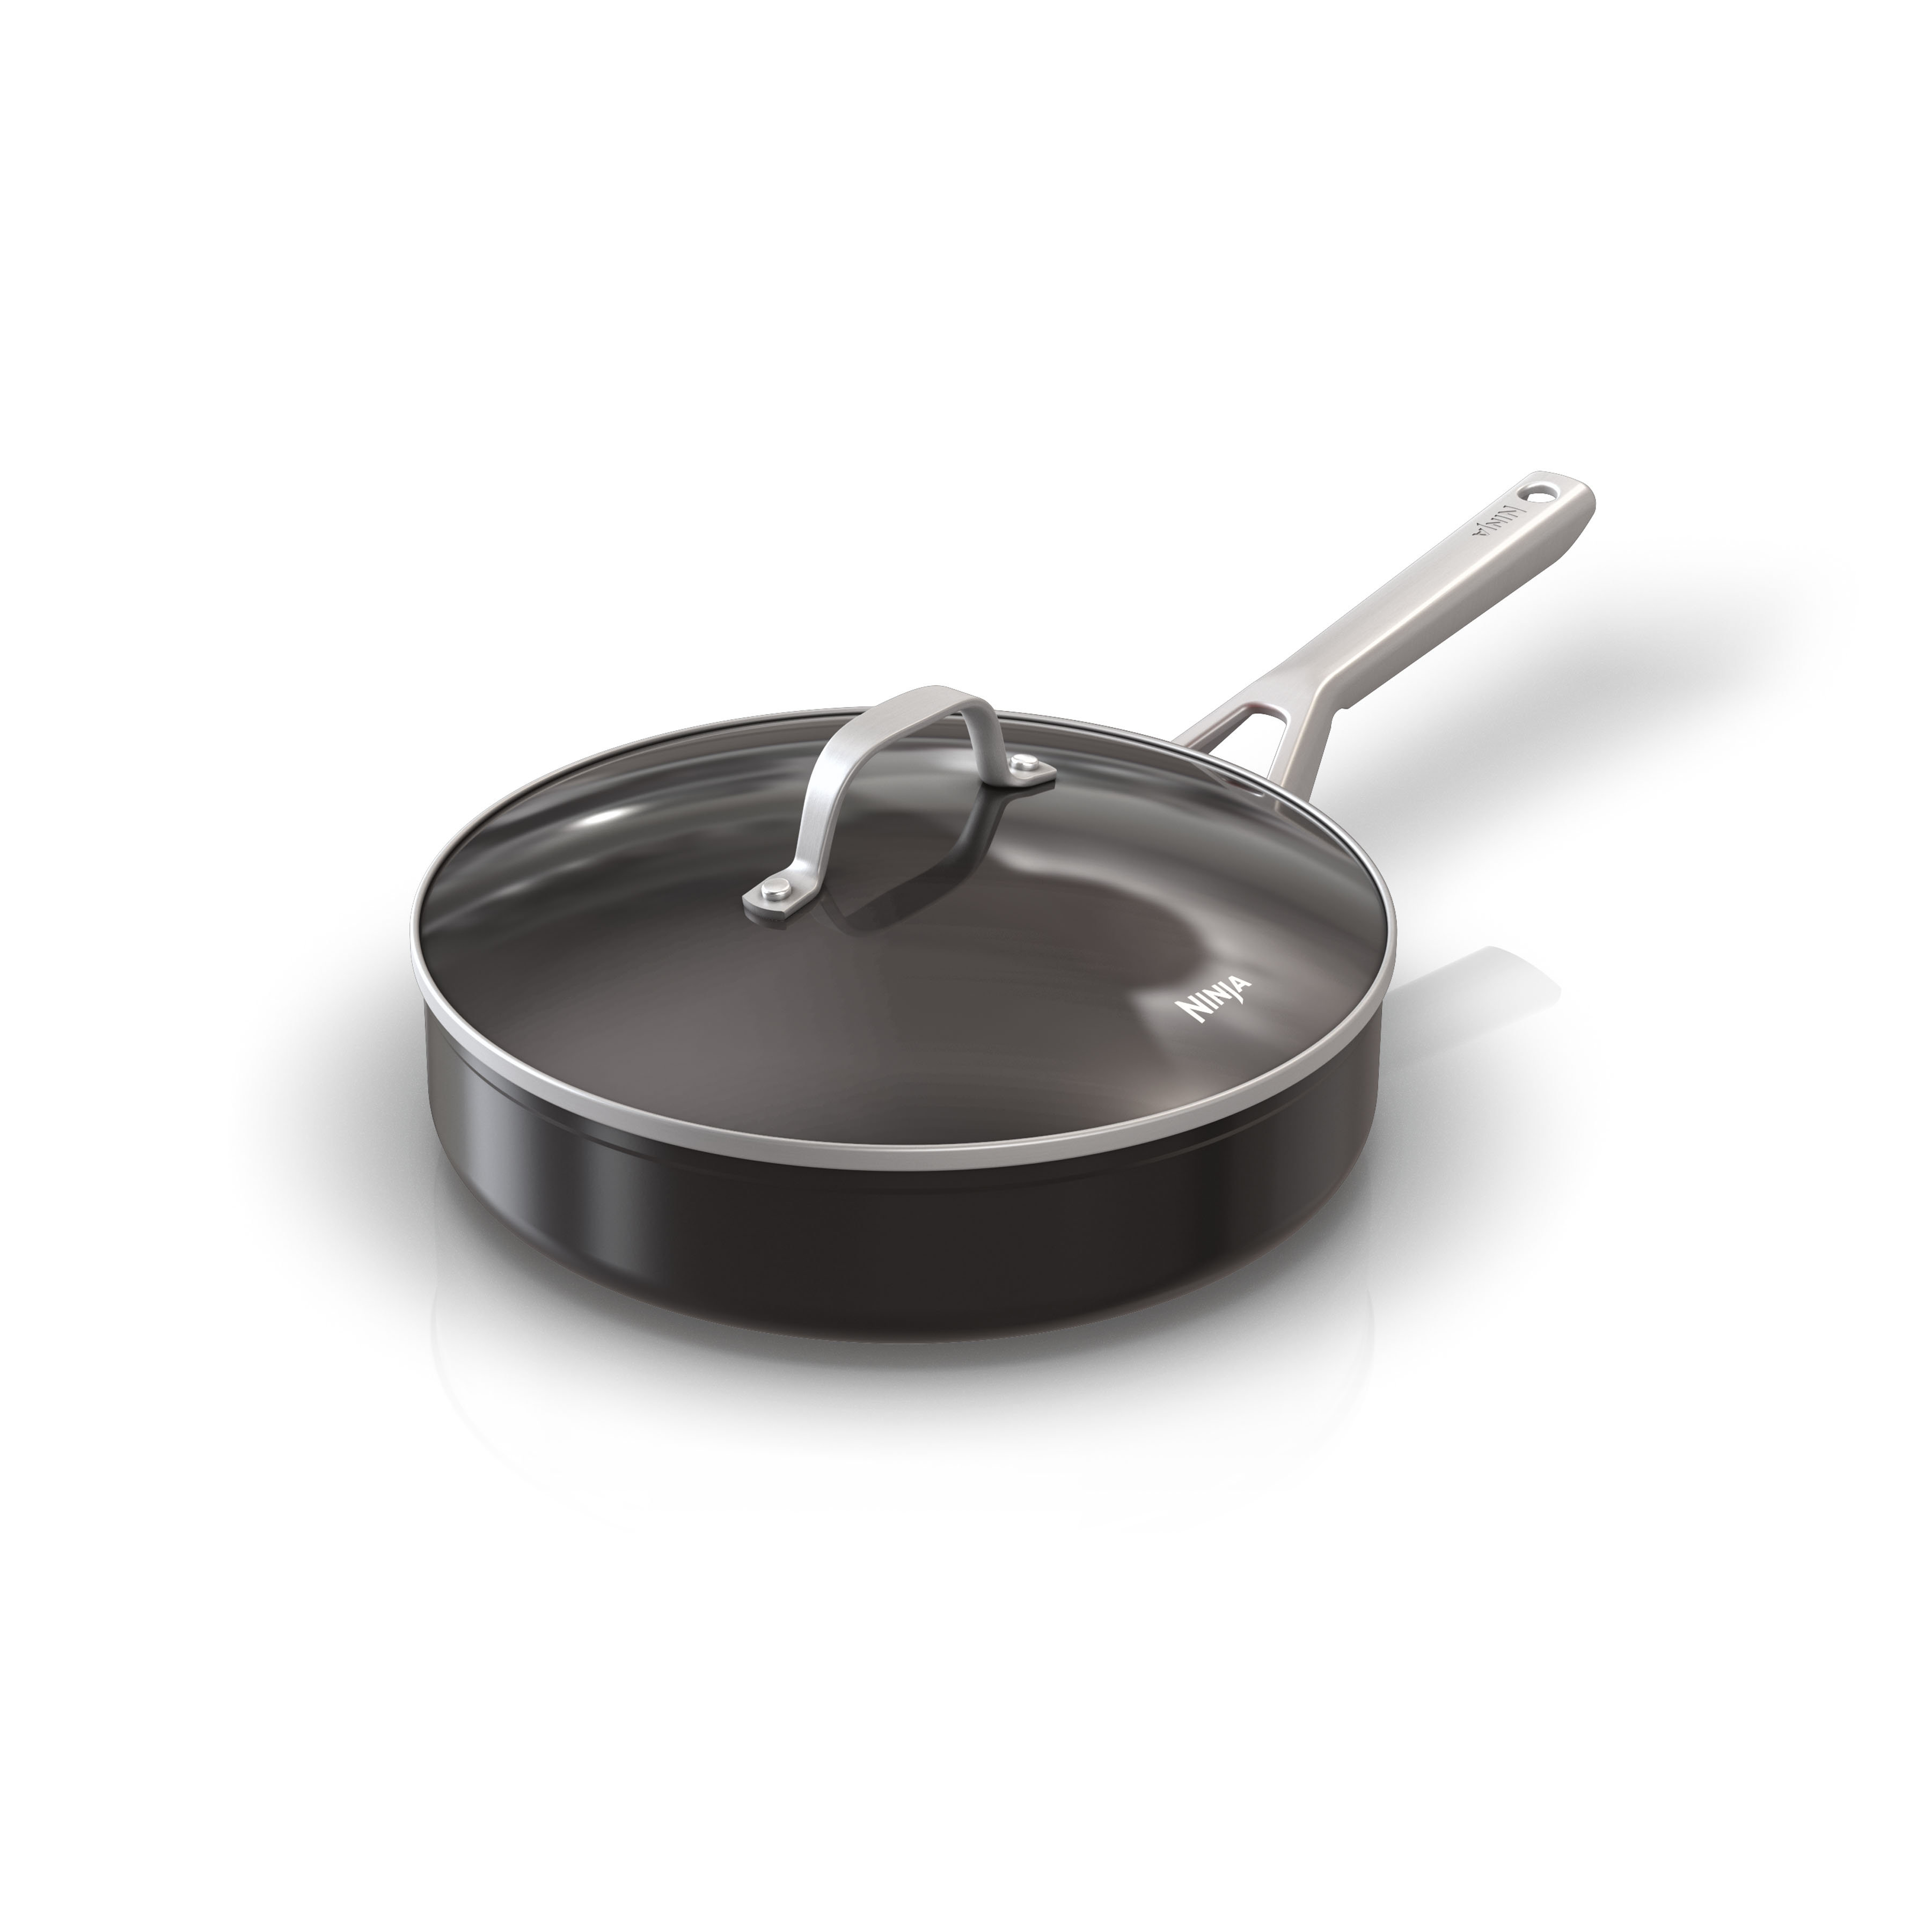 Ninja Foodi NeverStick 5-Qt. Saute Pan with Glass Lid